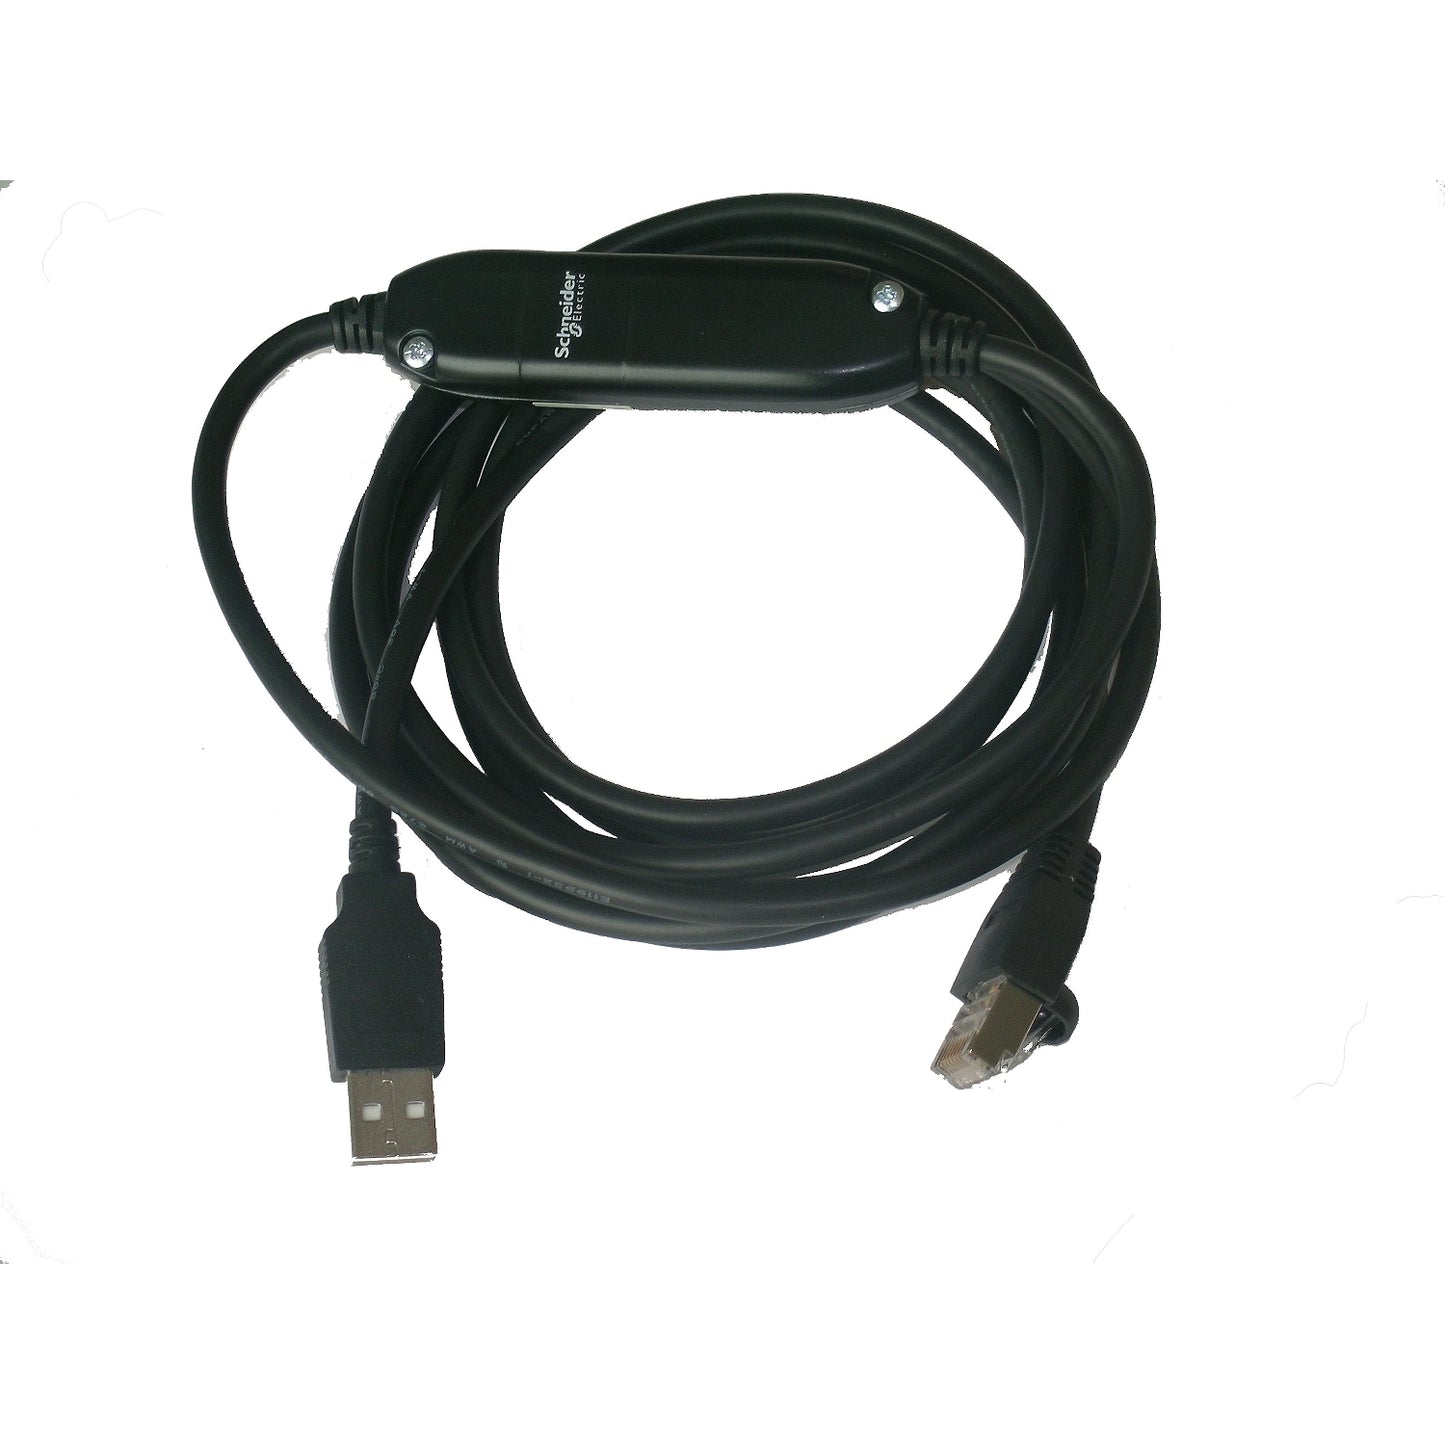 Cable USB/Modbus test "Acti9 Smartlink" A9XCATM1 - SCHNEIDER